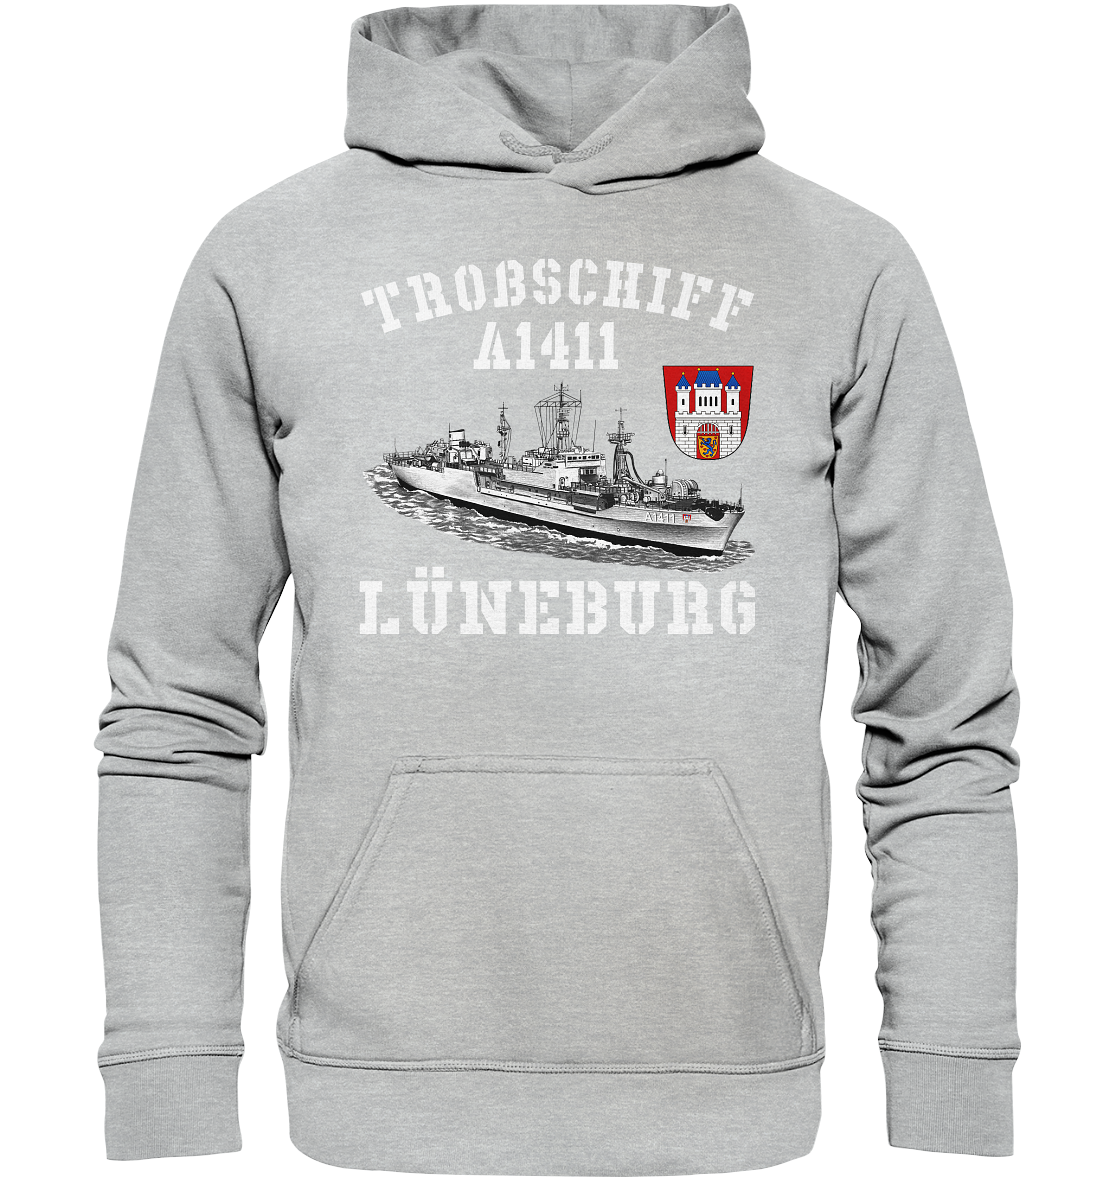 Troßschiff A1411 LÜNEBURG - Basic Unisex Hoodie